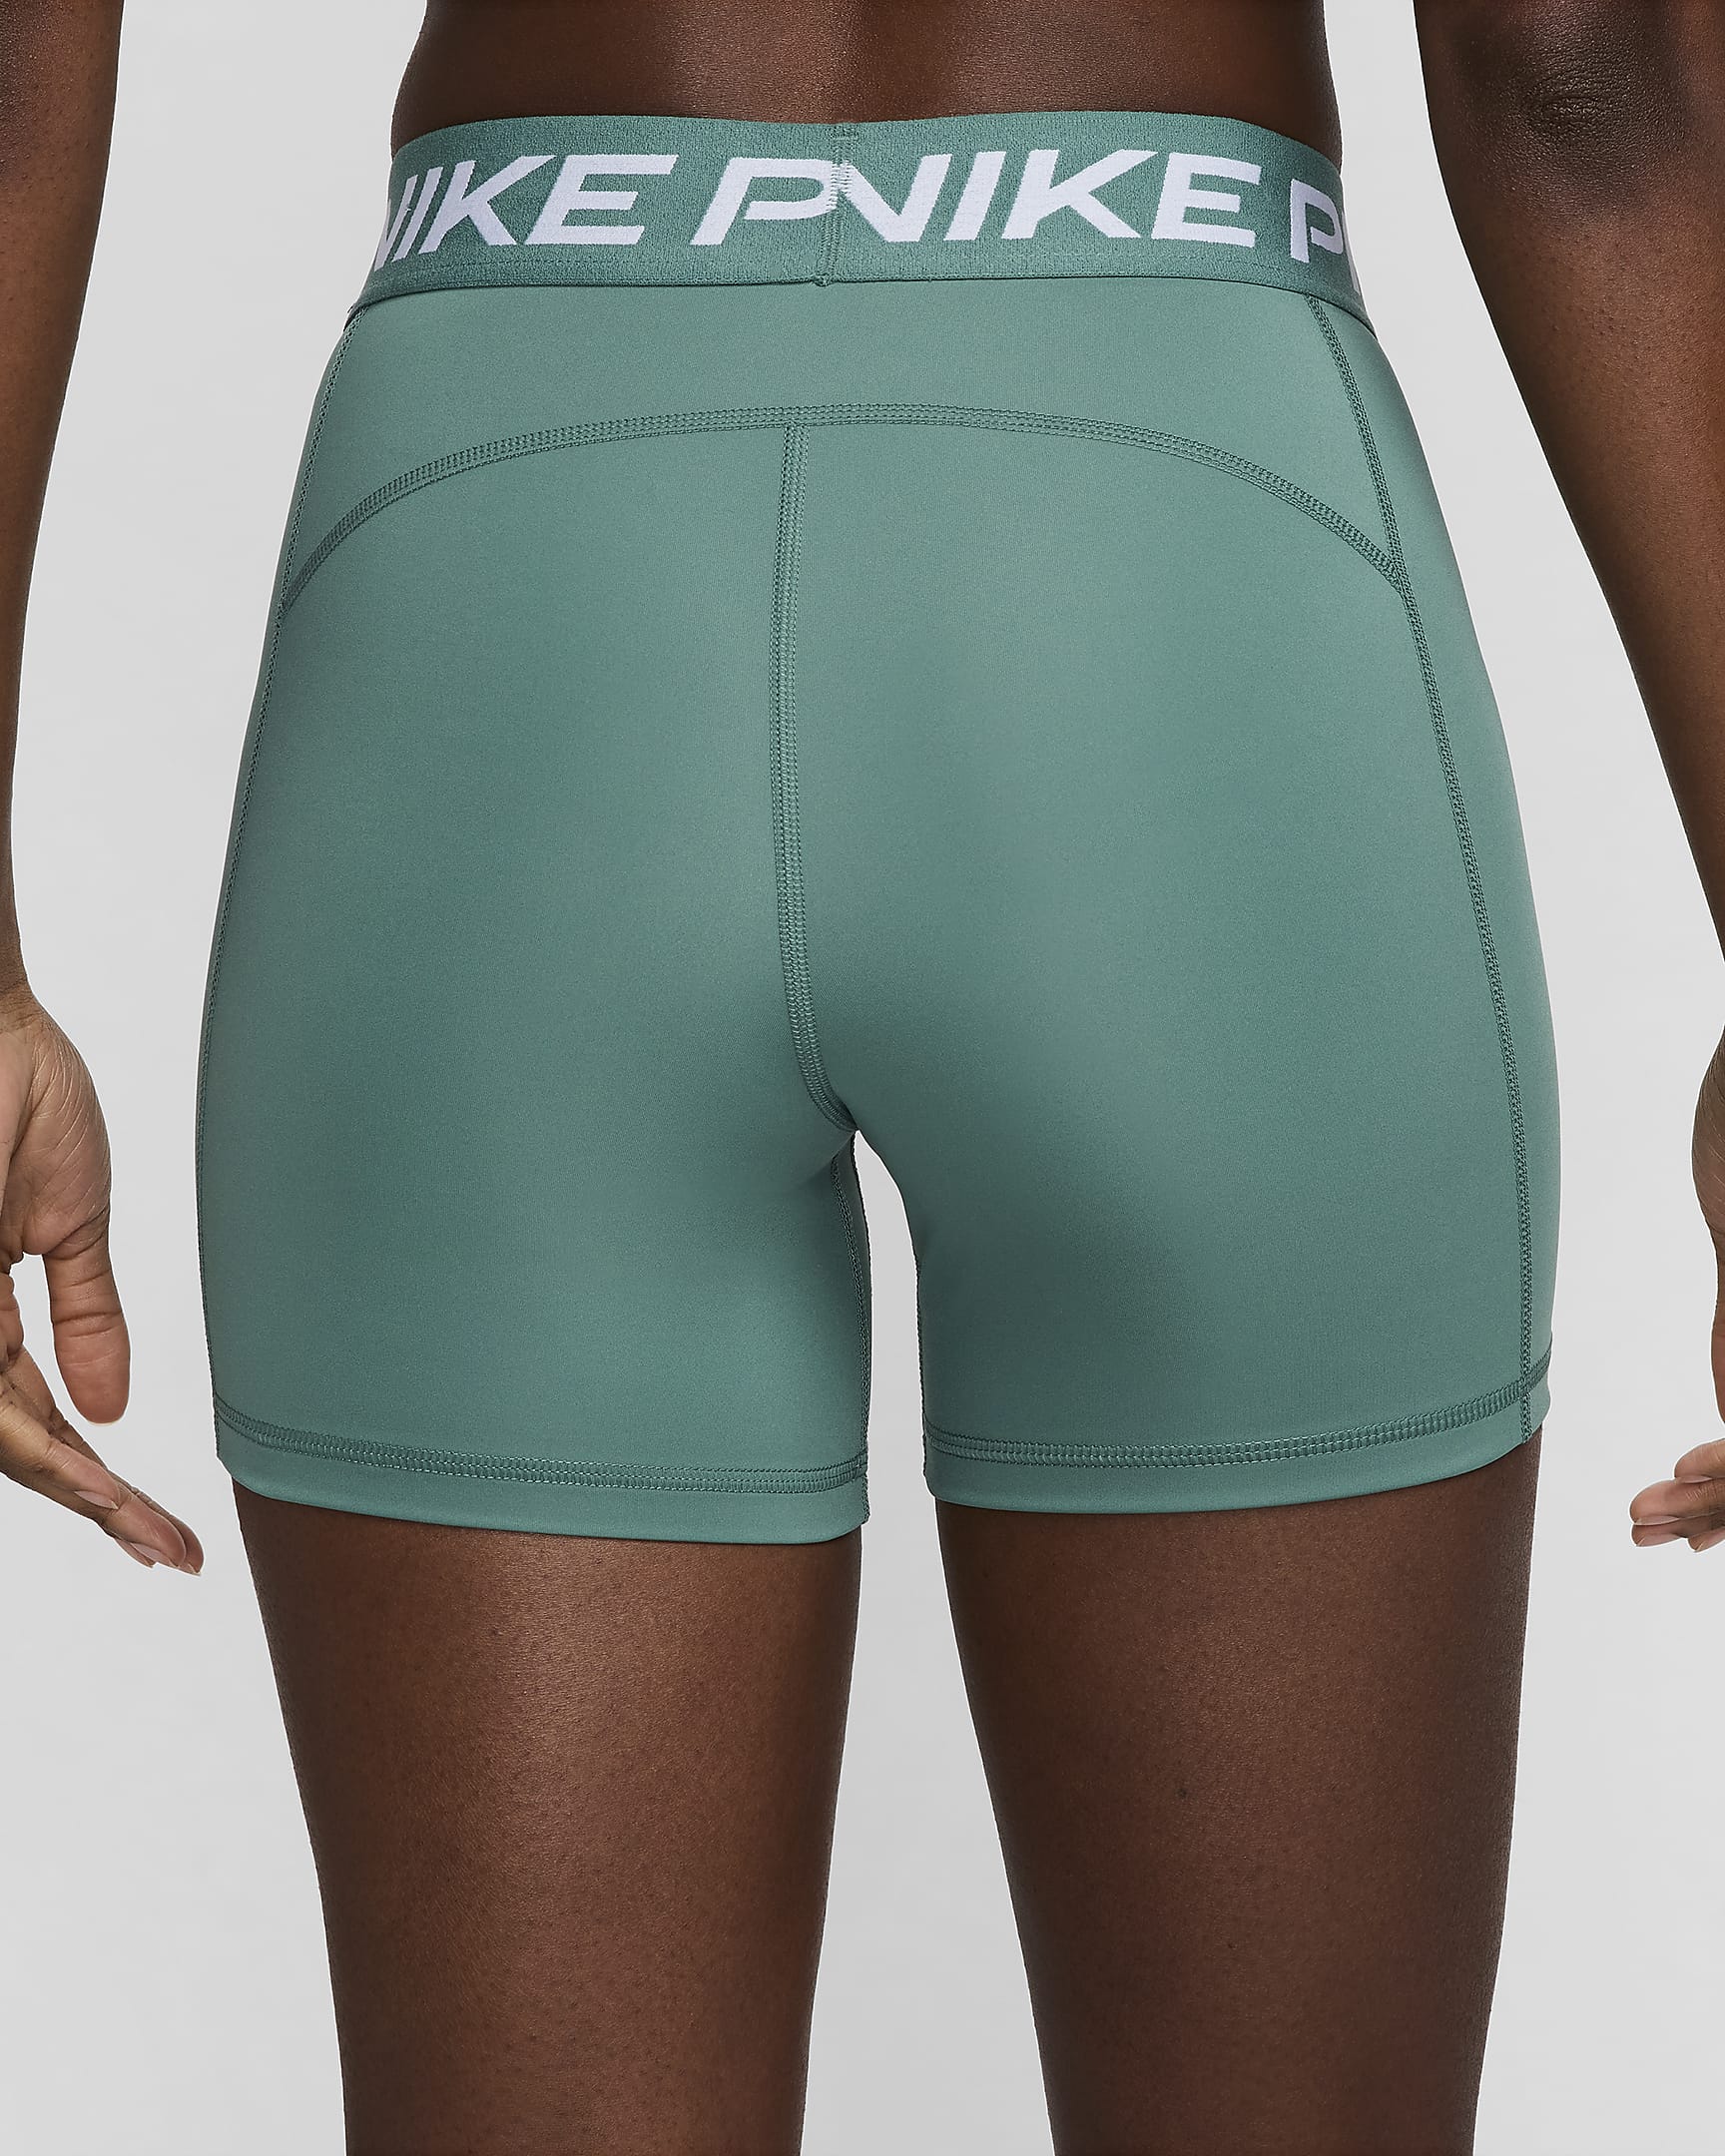 Nike Pro 365 Women's 13cm (approx.) Shorts - Bicoastal/White